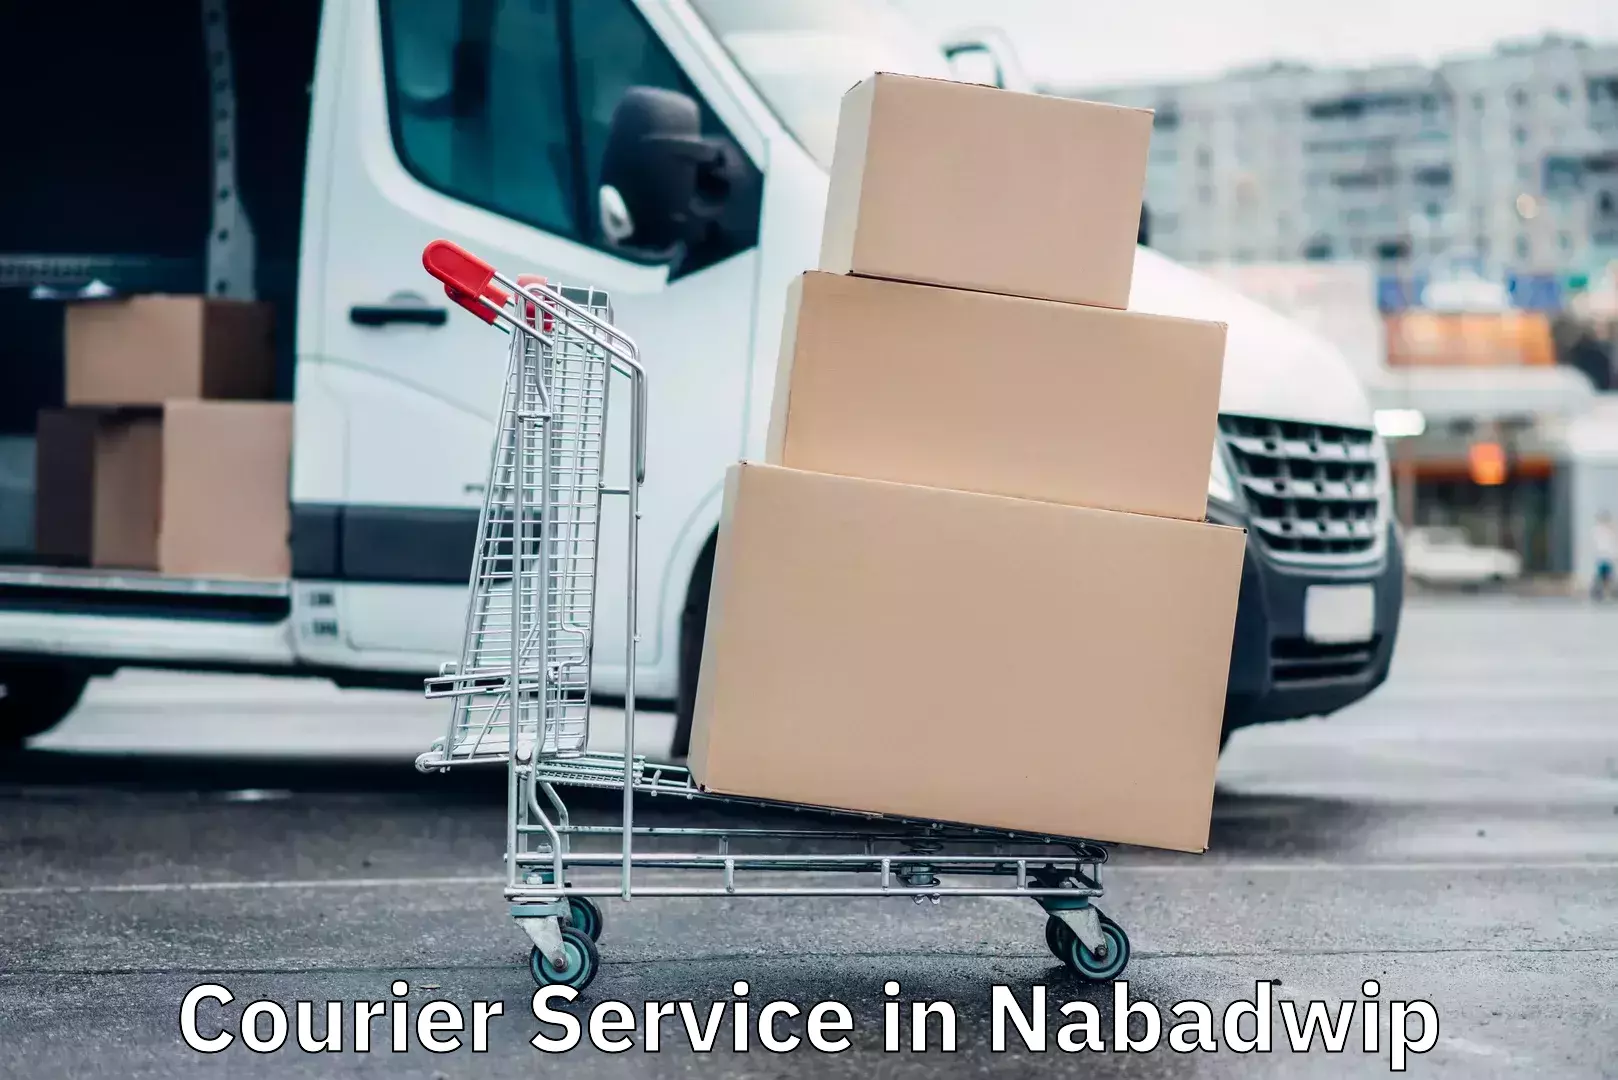 Logistics service provider in Nabadwip